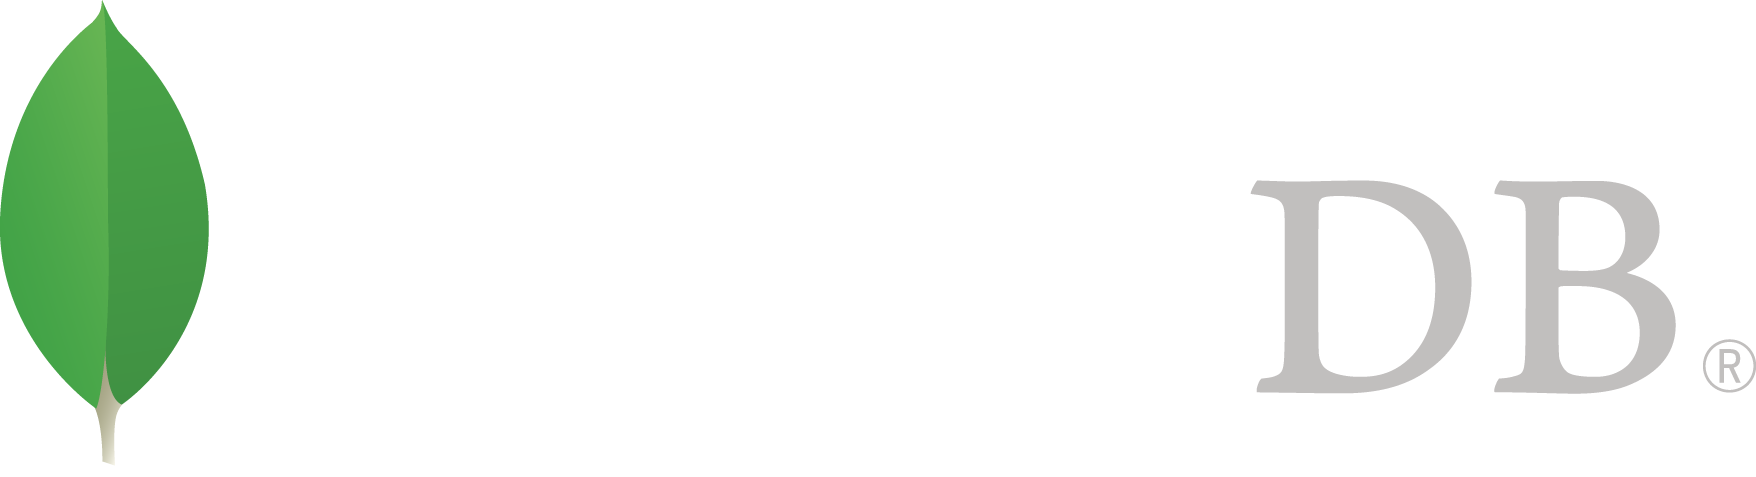 Logo Mongodb Png Hdpng.com 1756 - Mongodb, Transparent background PNG HD thumbnail